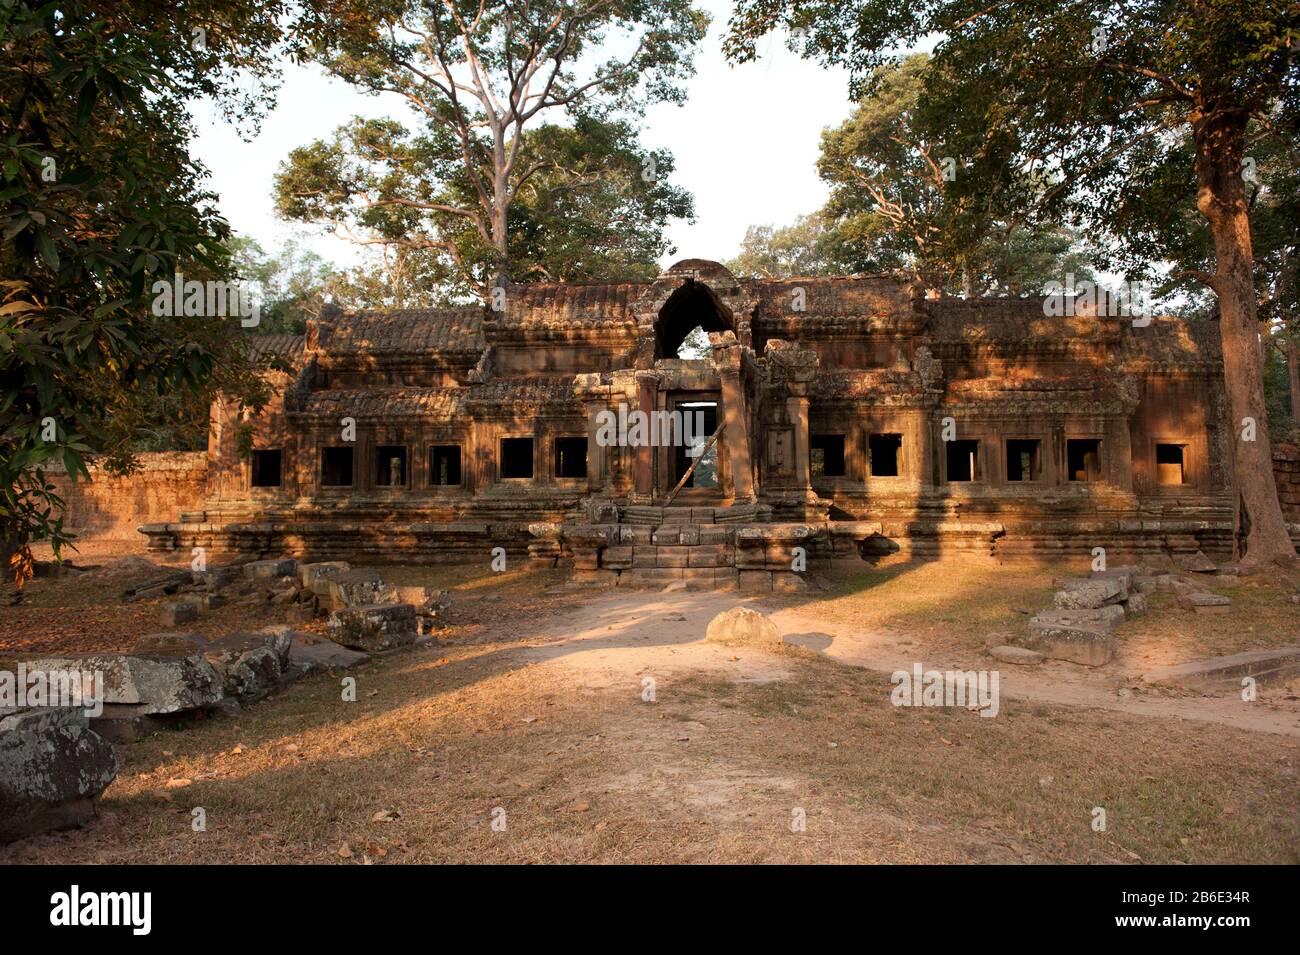 Ruines d'un temple, Angkor Wat, Angkor, Siem Reap, Cambodge Banque D'Images